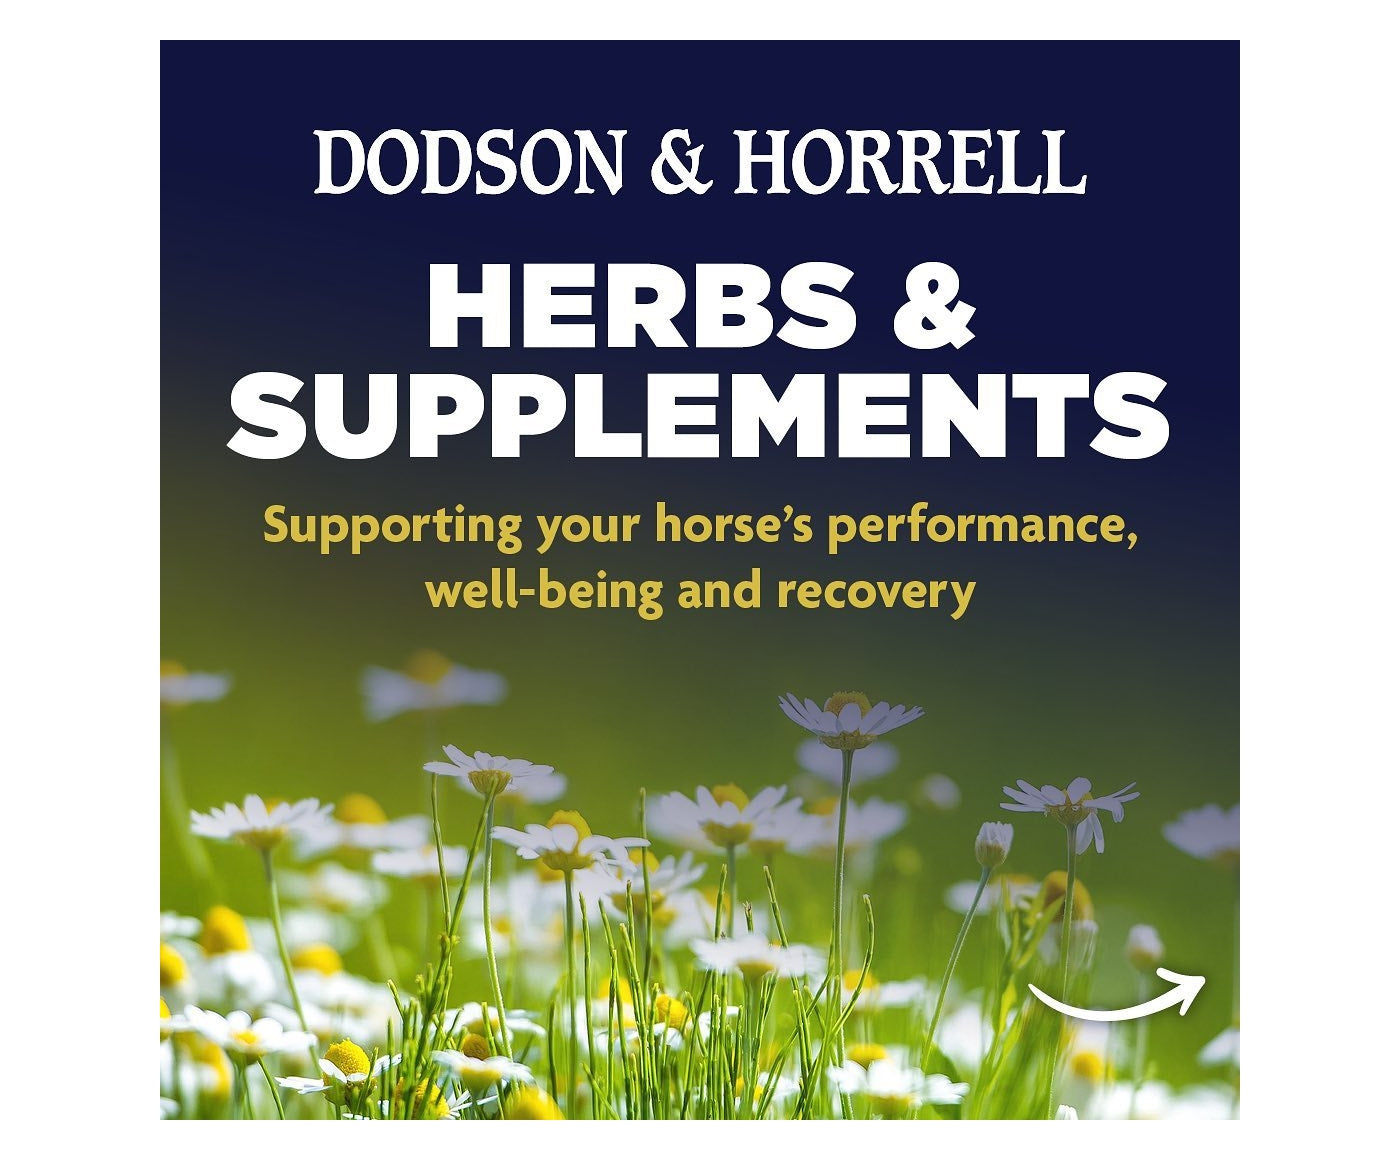 Dodson & Horrell Breathe-Free 1kg | Horse Suplement - Buy Online SPR Centre UK